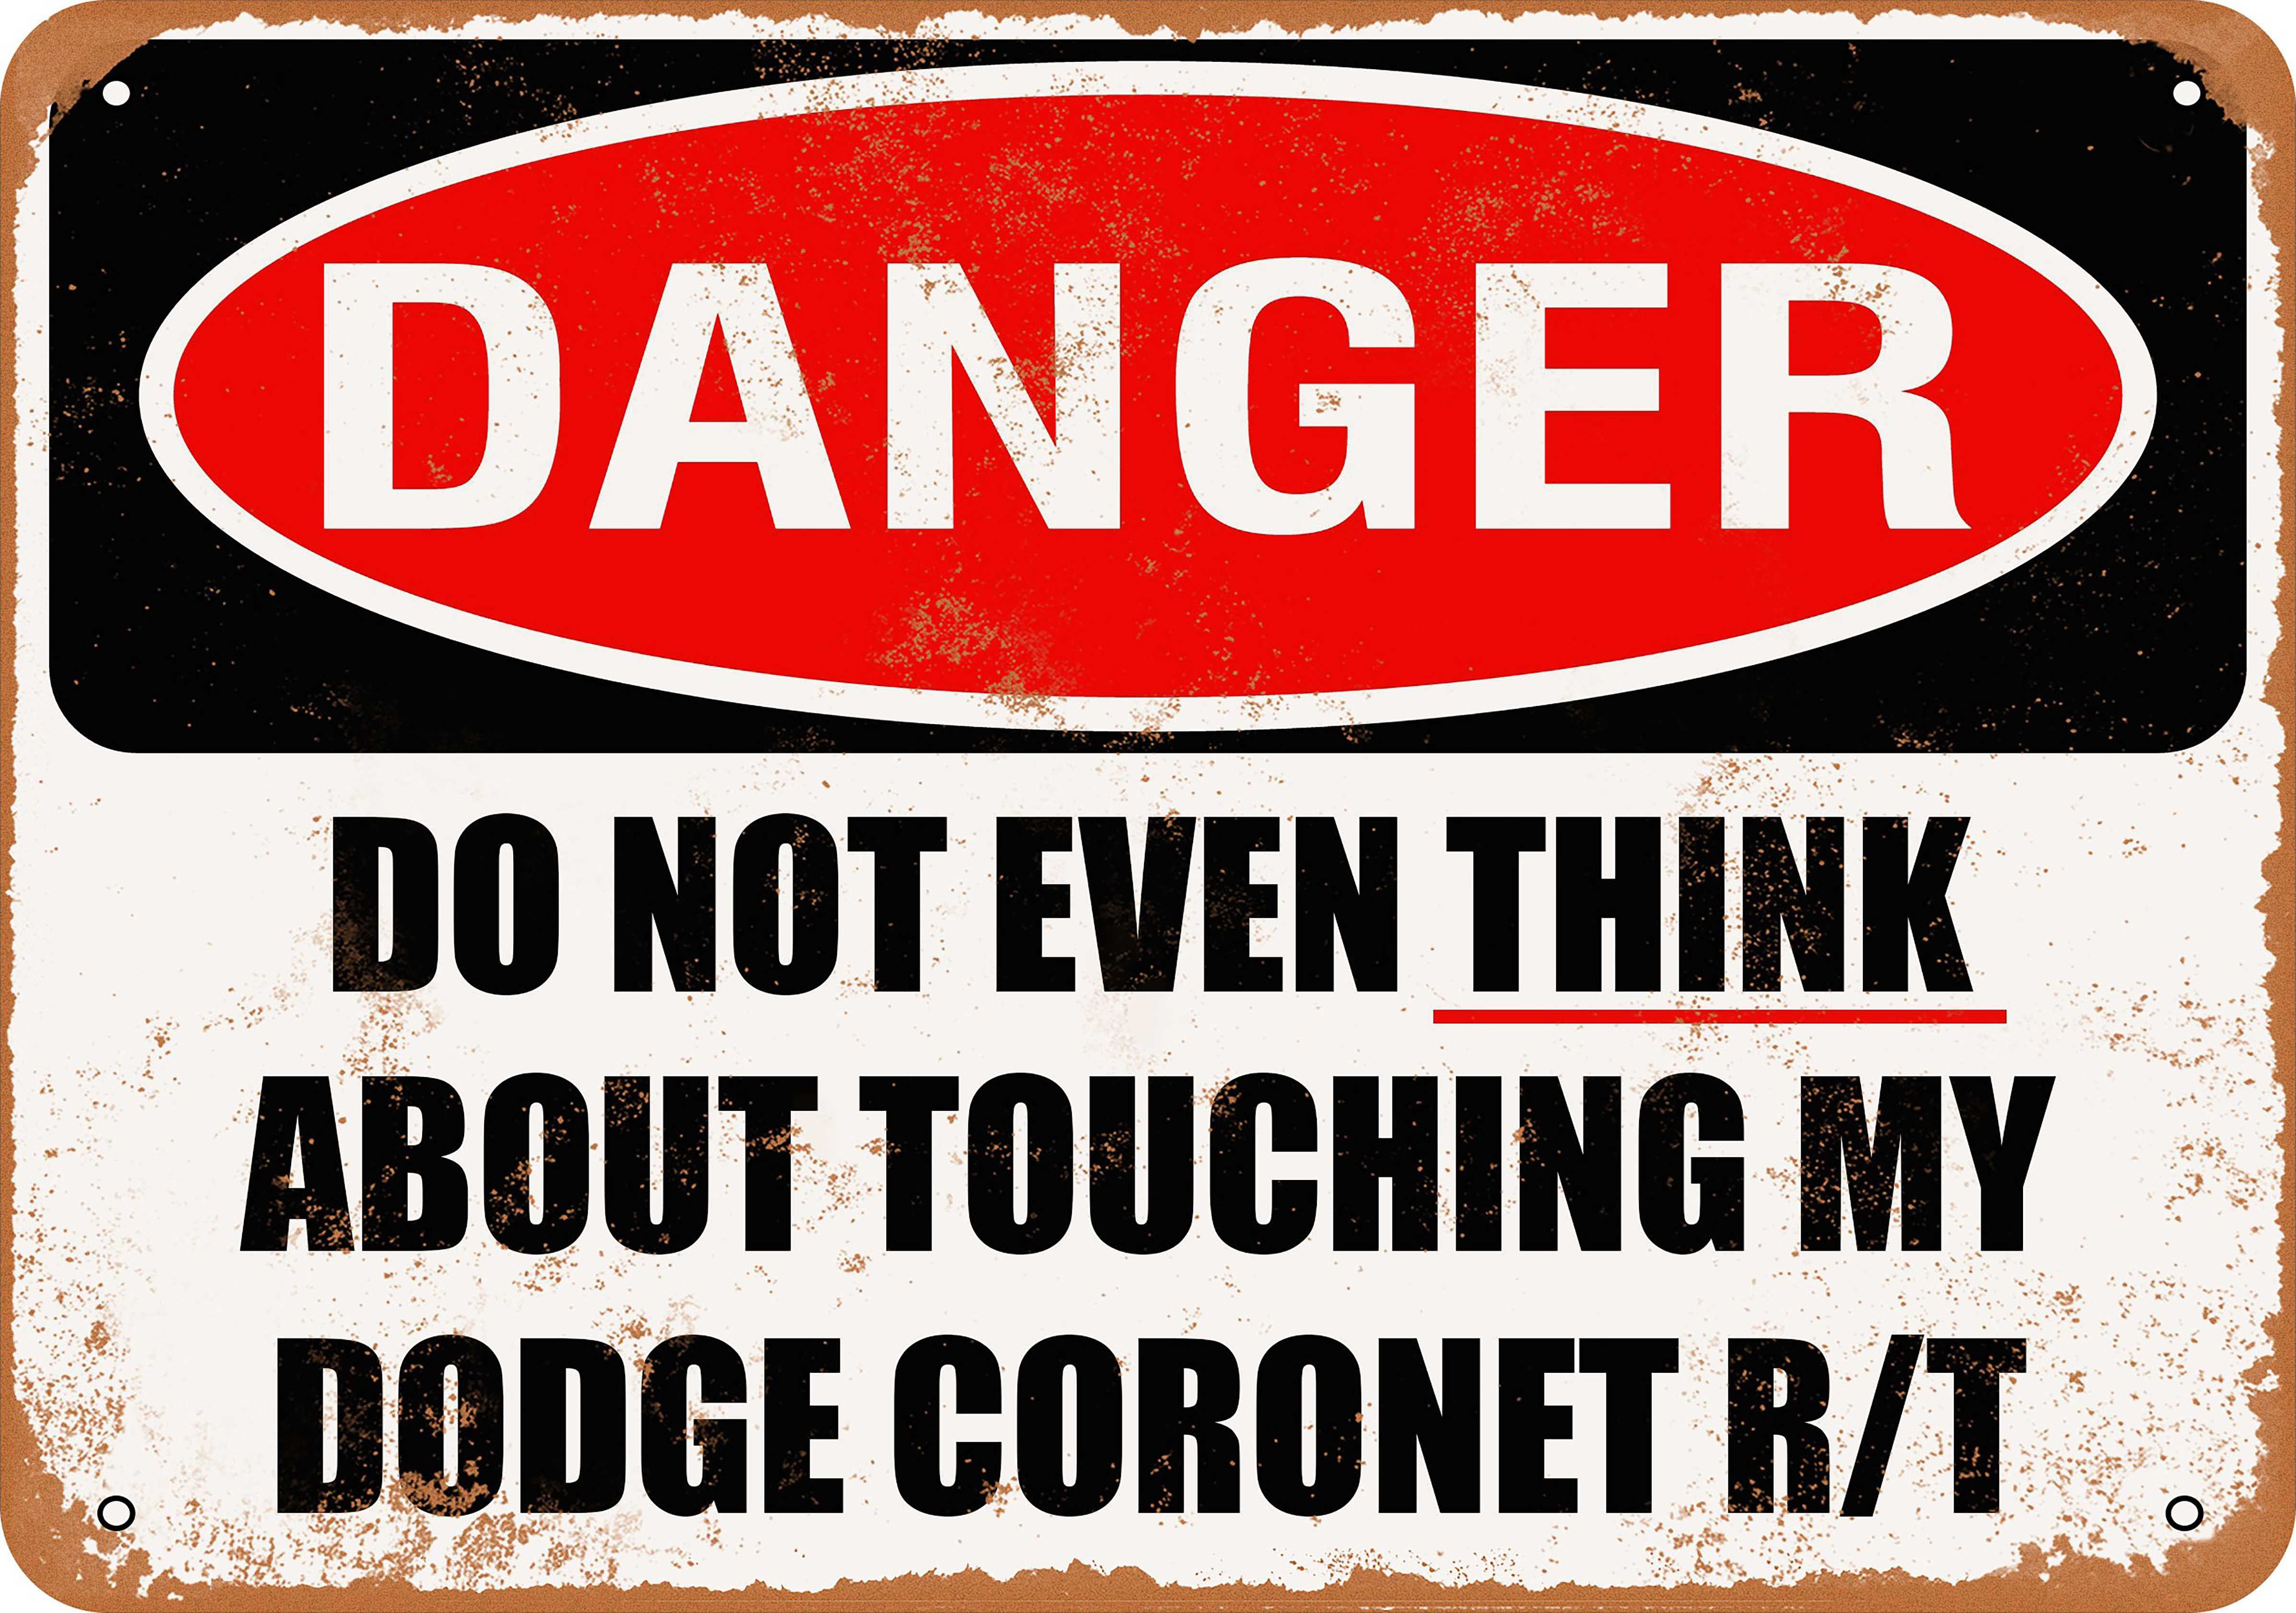 DODGE CORONET Aluminum Parking Sign 10x14